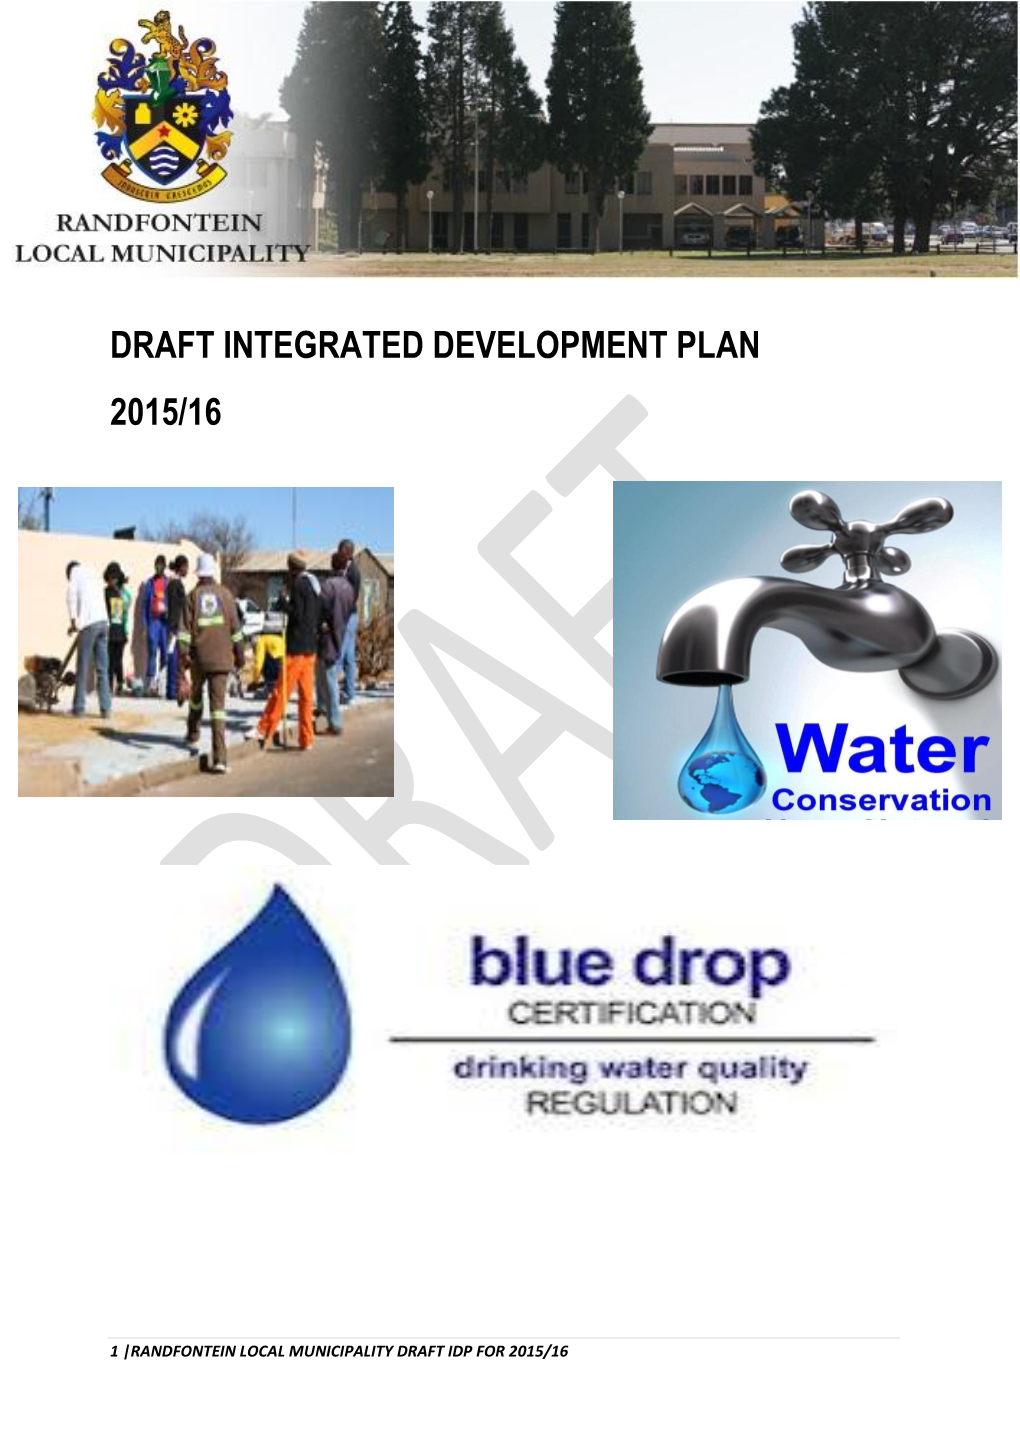 Draft Integrated Development Plan 2015/16